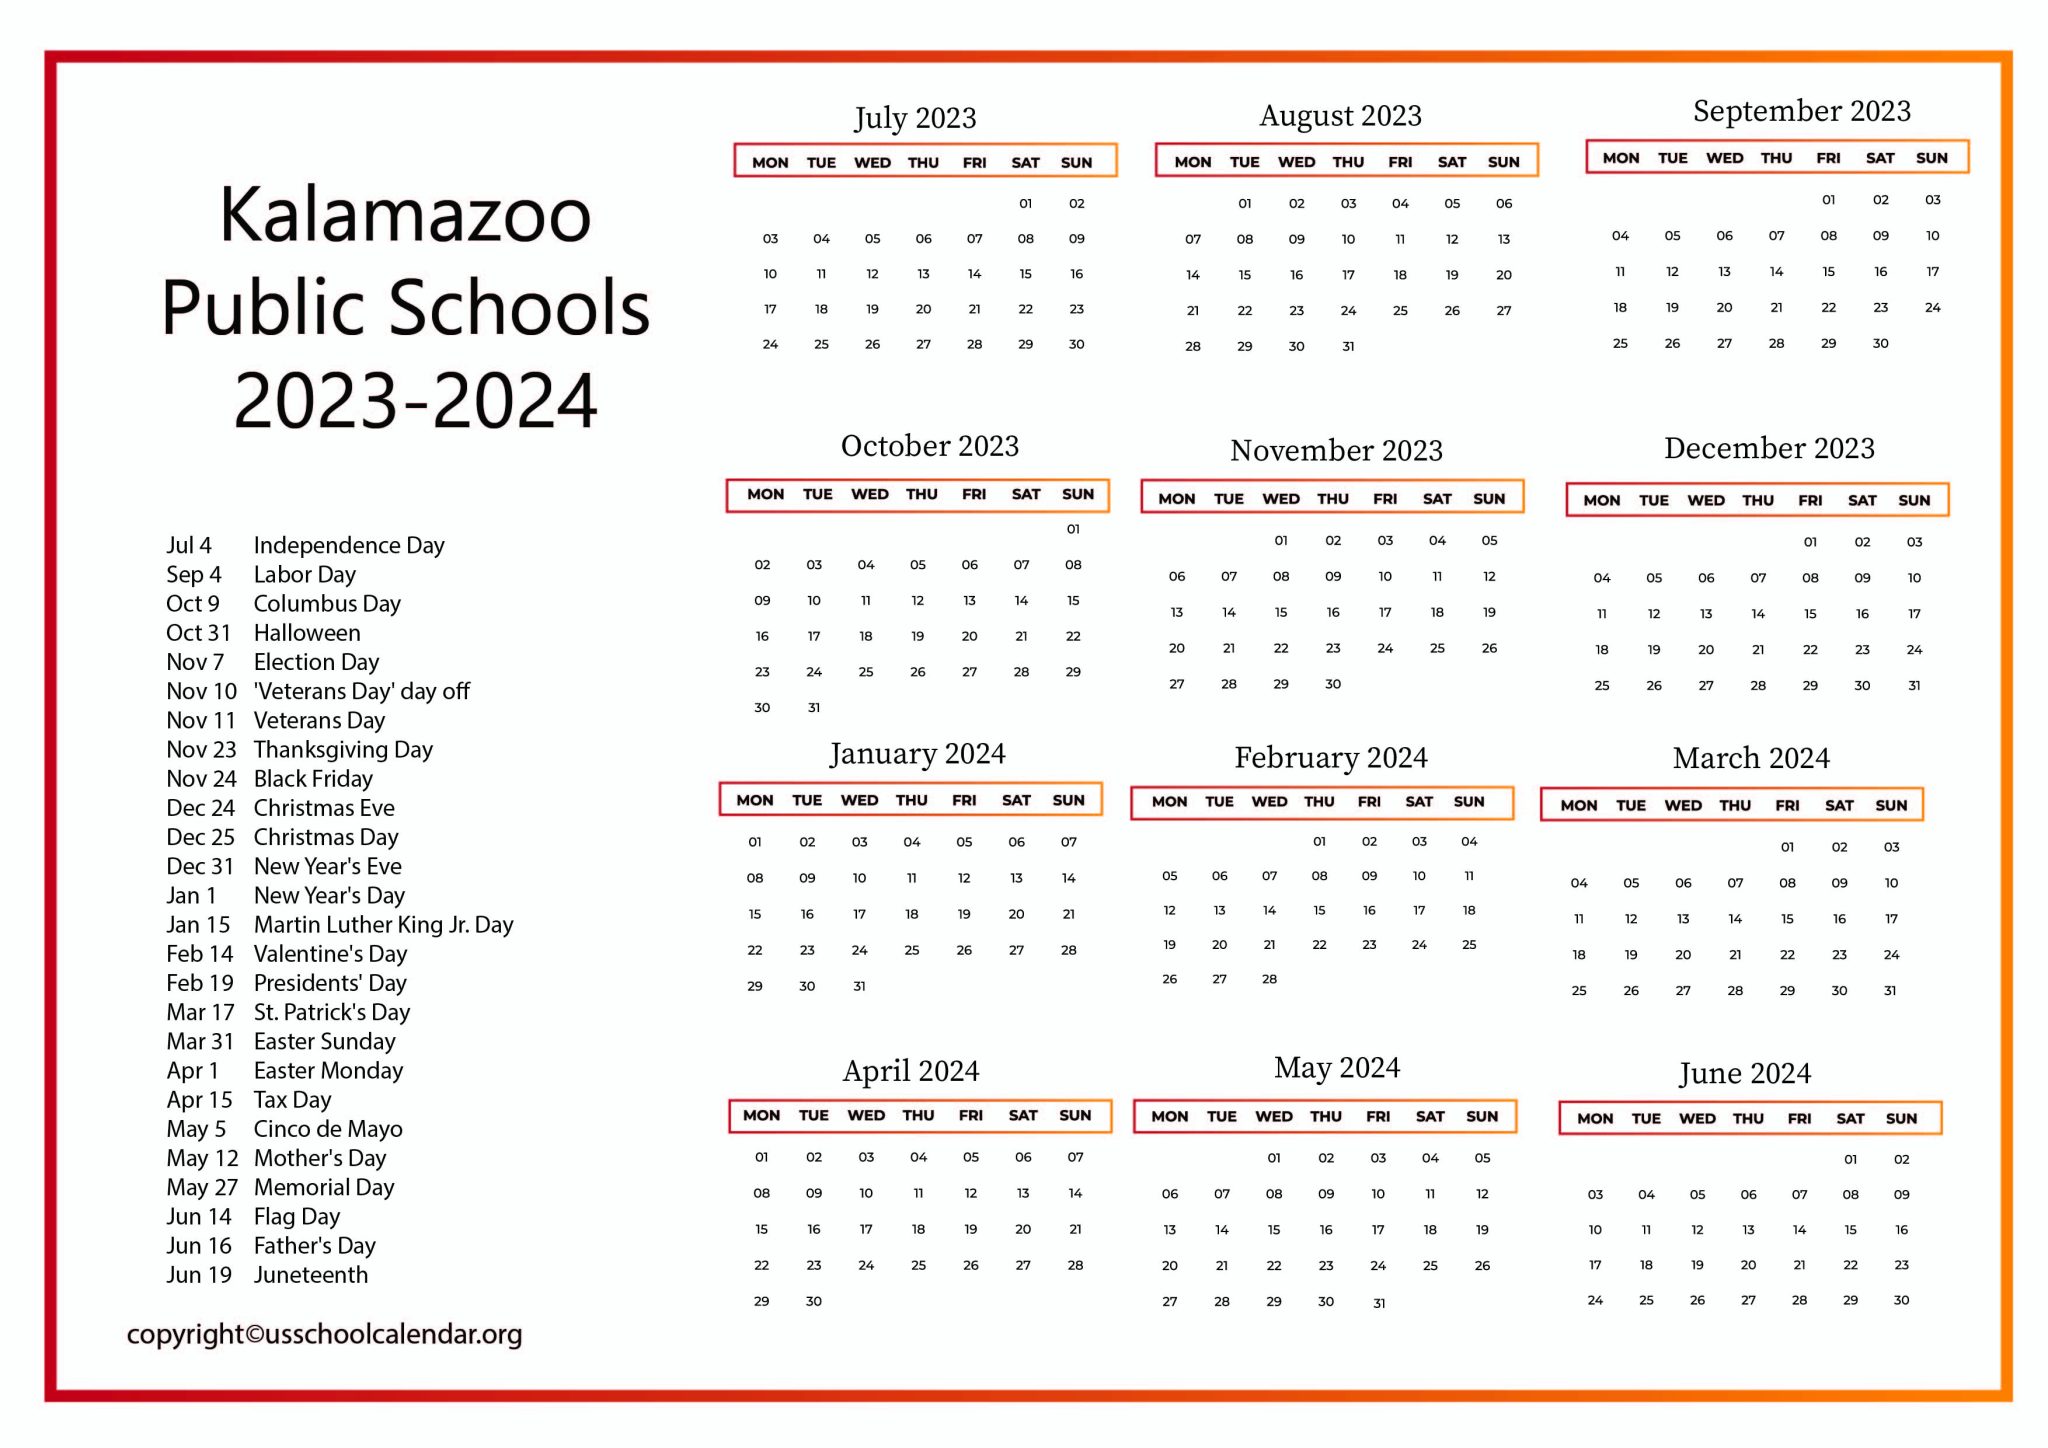 kalamazoo-public-schools-calendar-with-holidays-2023-2024